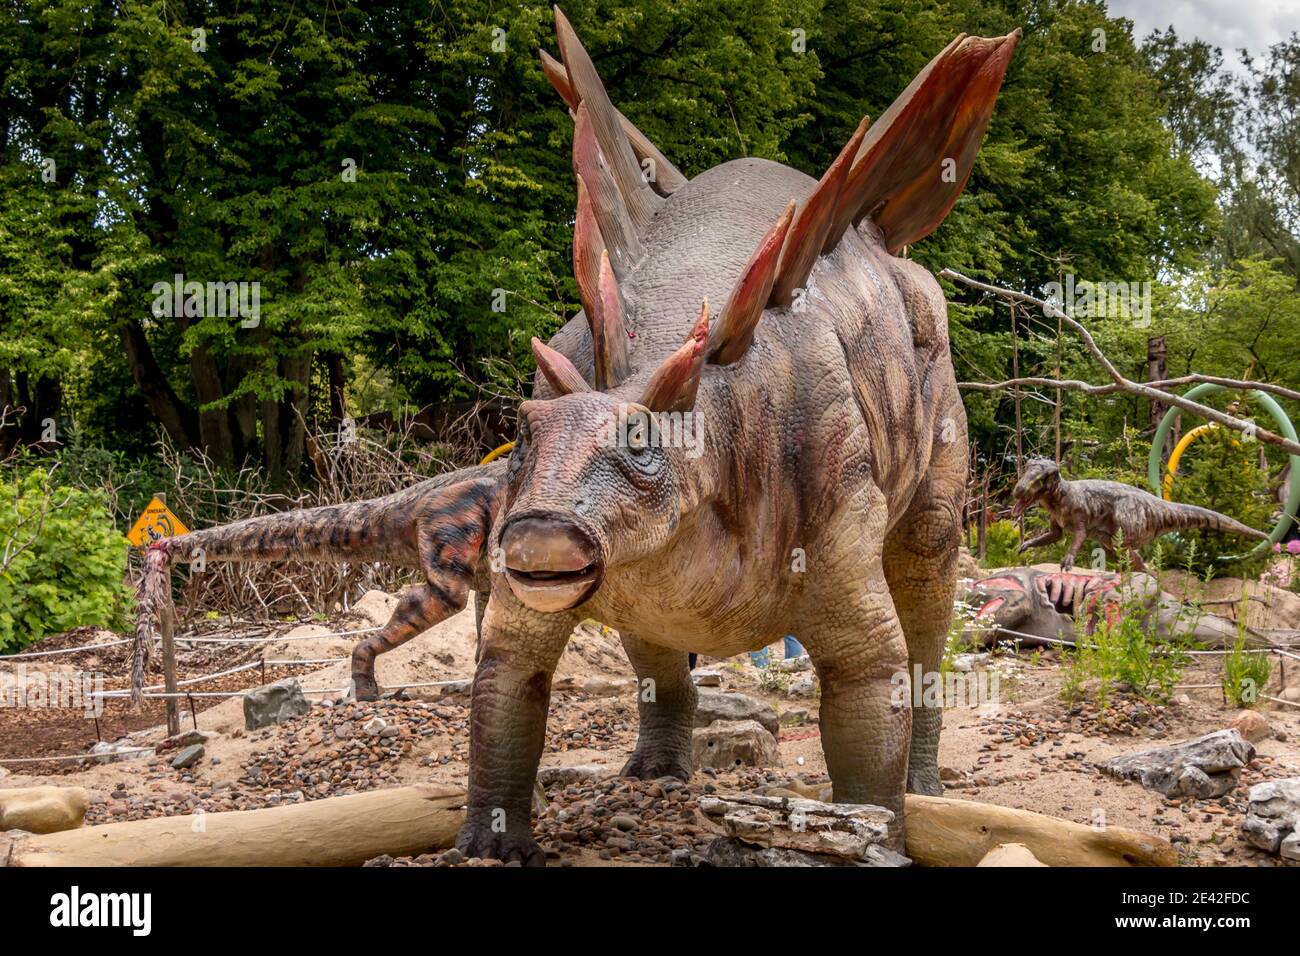 Aalborg, Denmark - 25 Jul 2020: Dinosaur stegosaurus in natural and in lifelike size Photo - Alamy